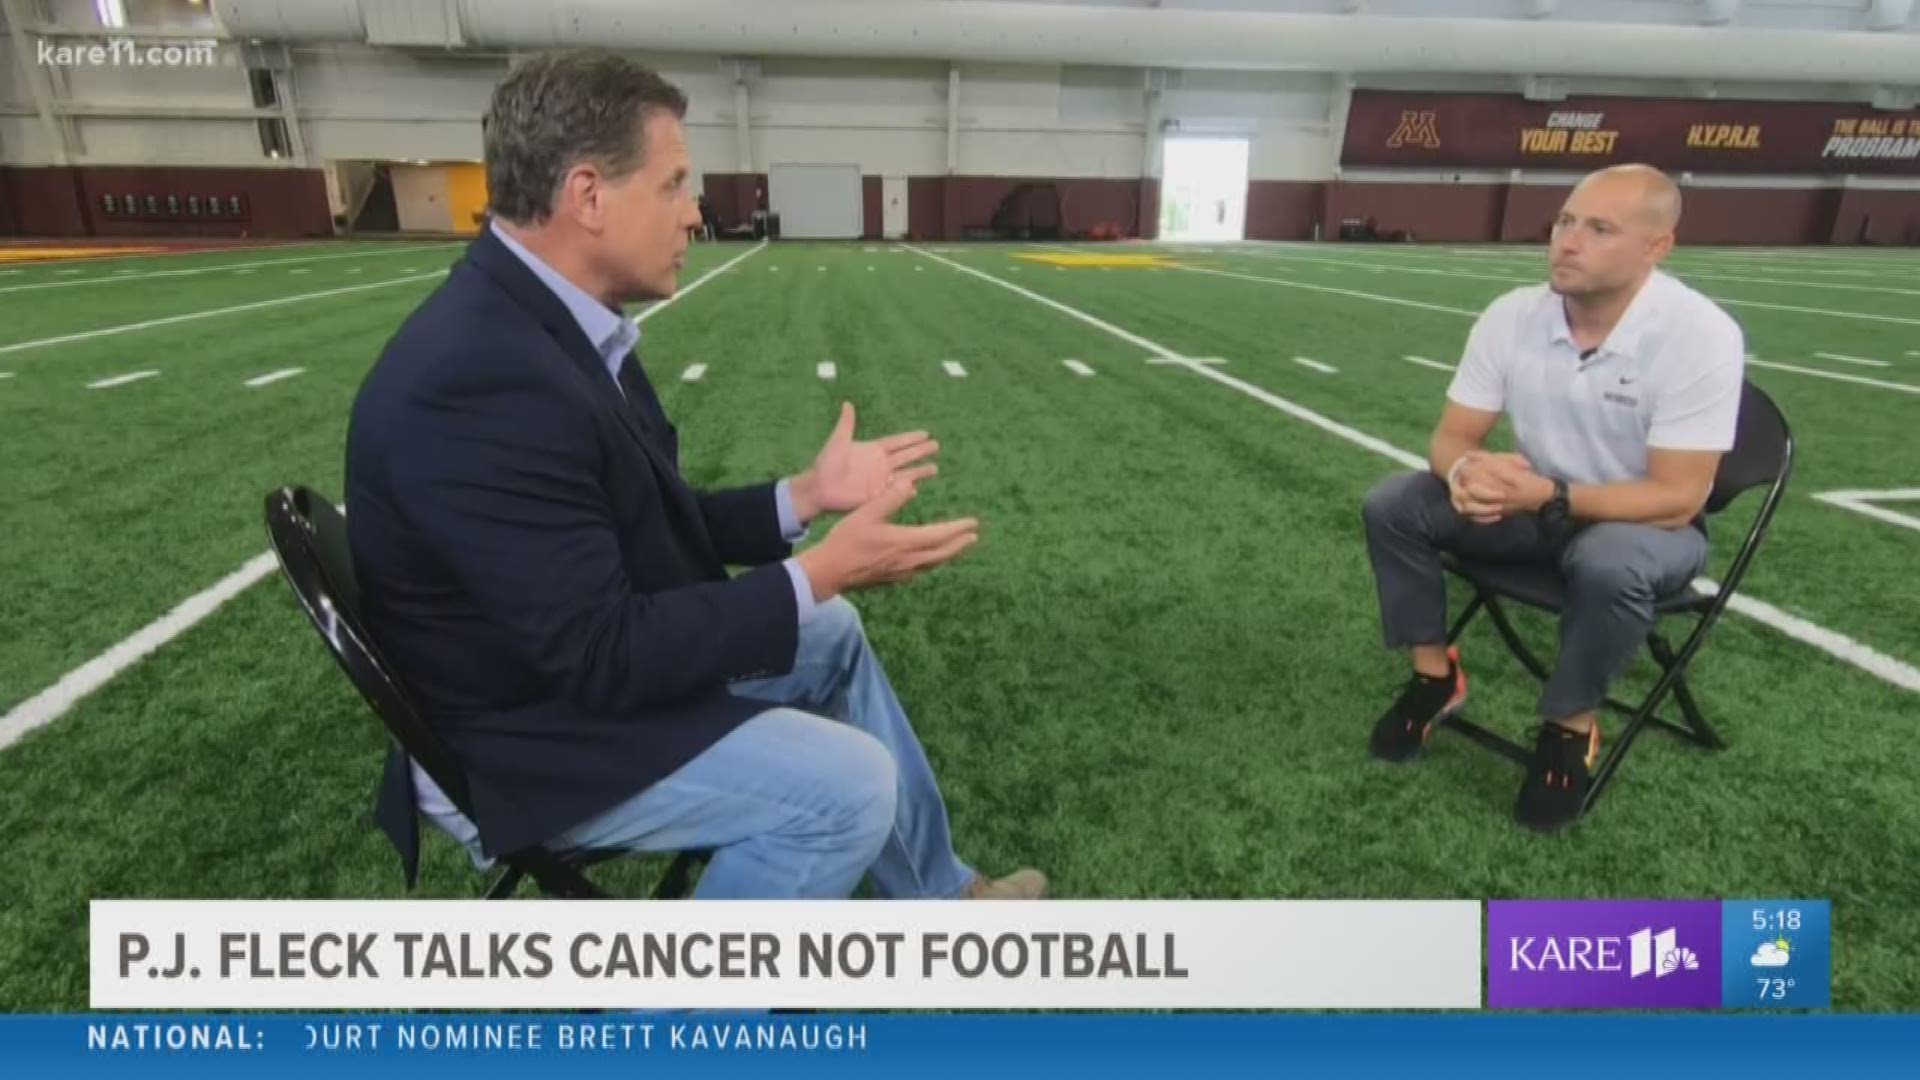 PJ Fleck talks about cancer - not football